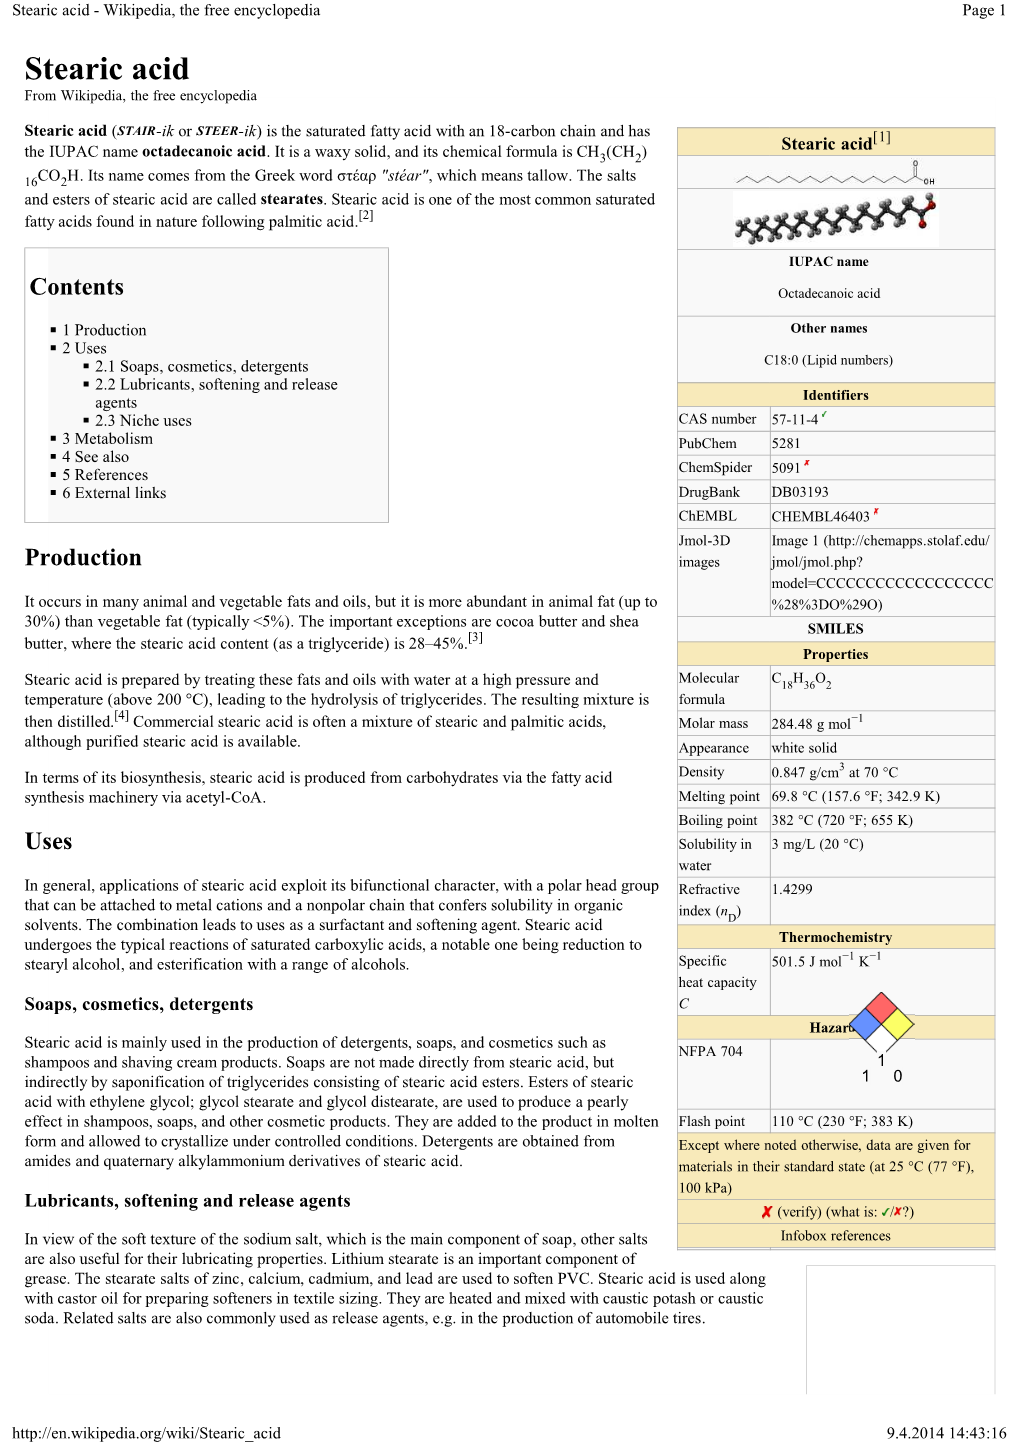 Stearic Acid - Wikipedia, the Free Encyclopedia Page 1